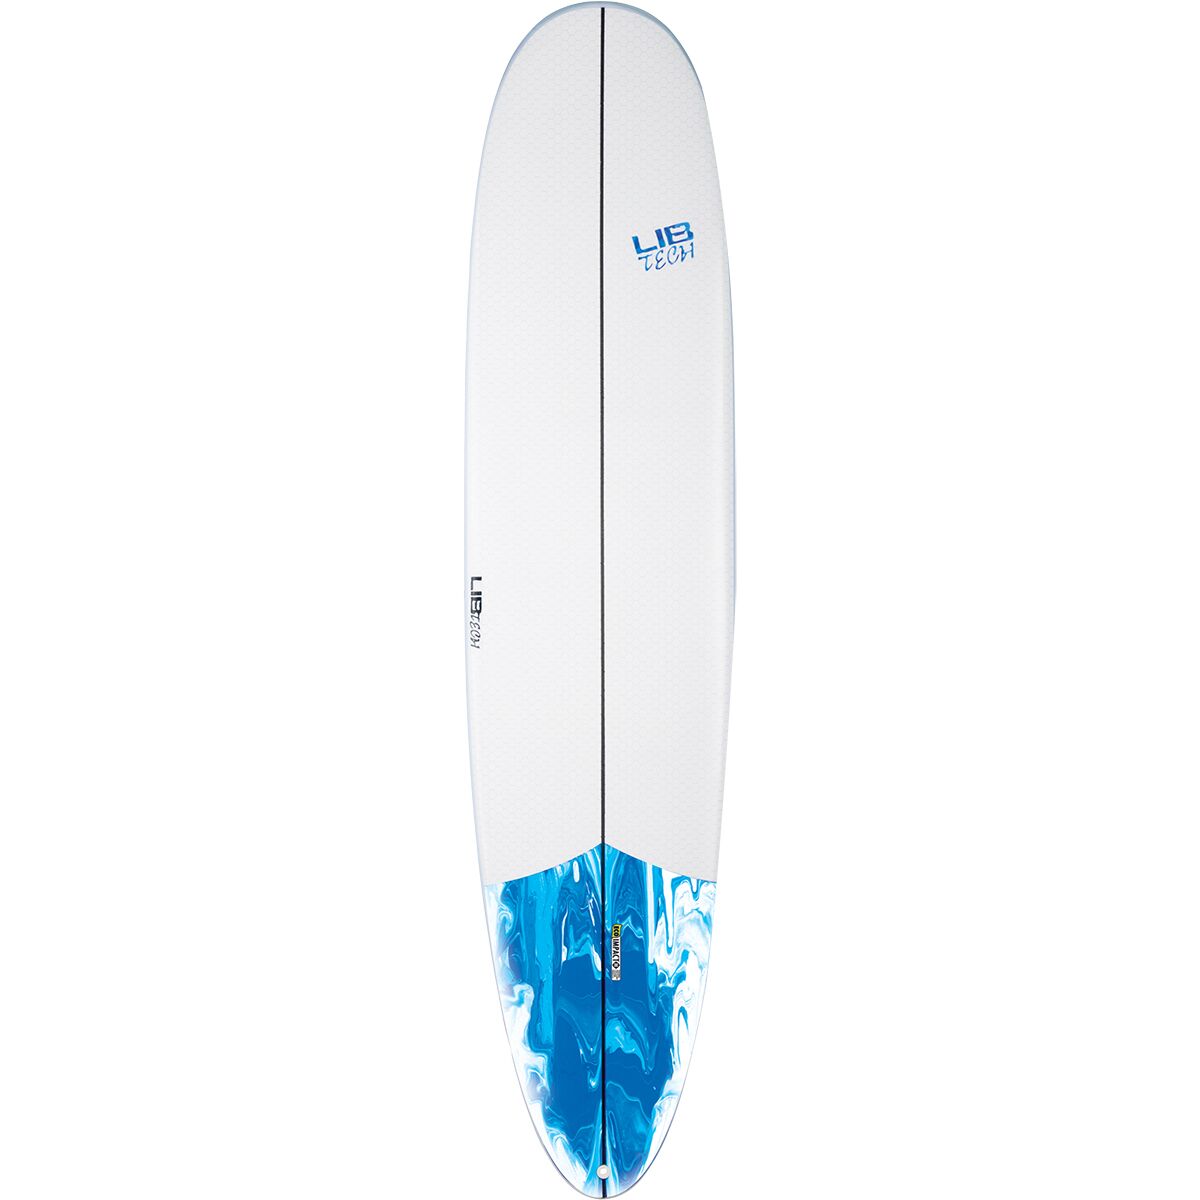 Lib Technologies Pickup Stick Surfboard